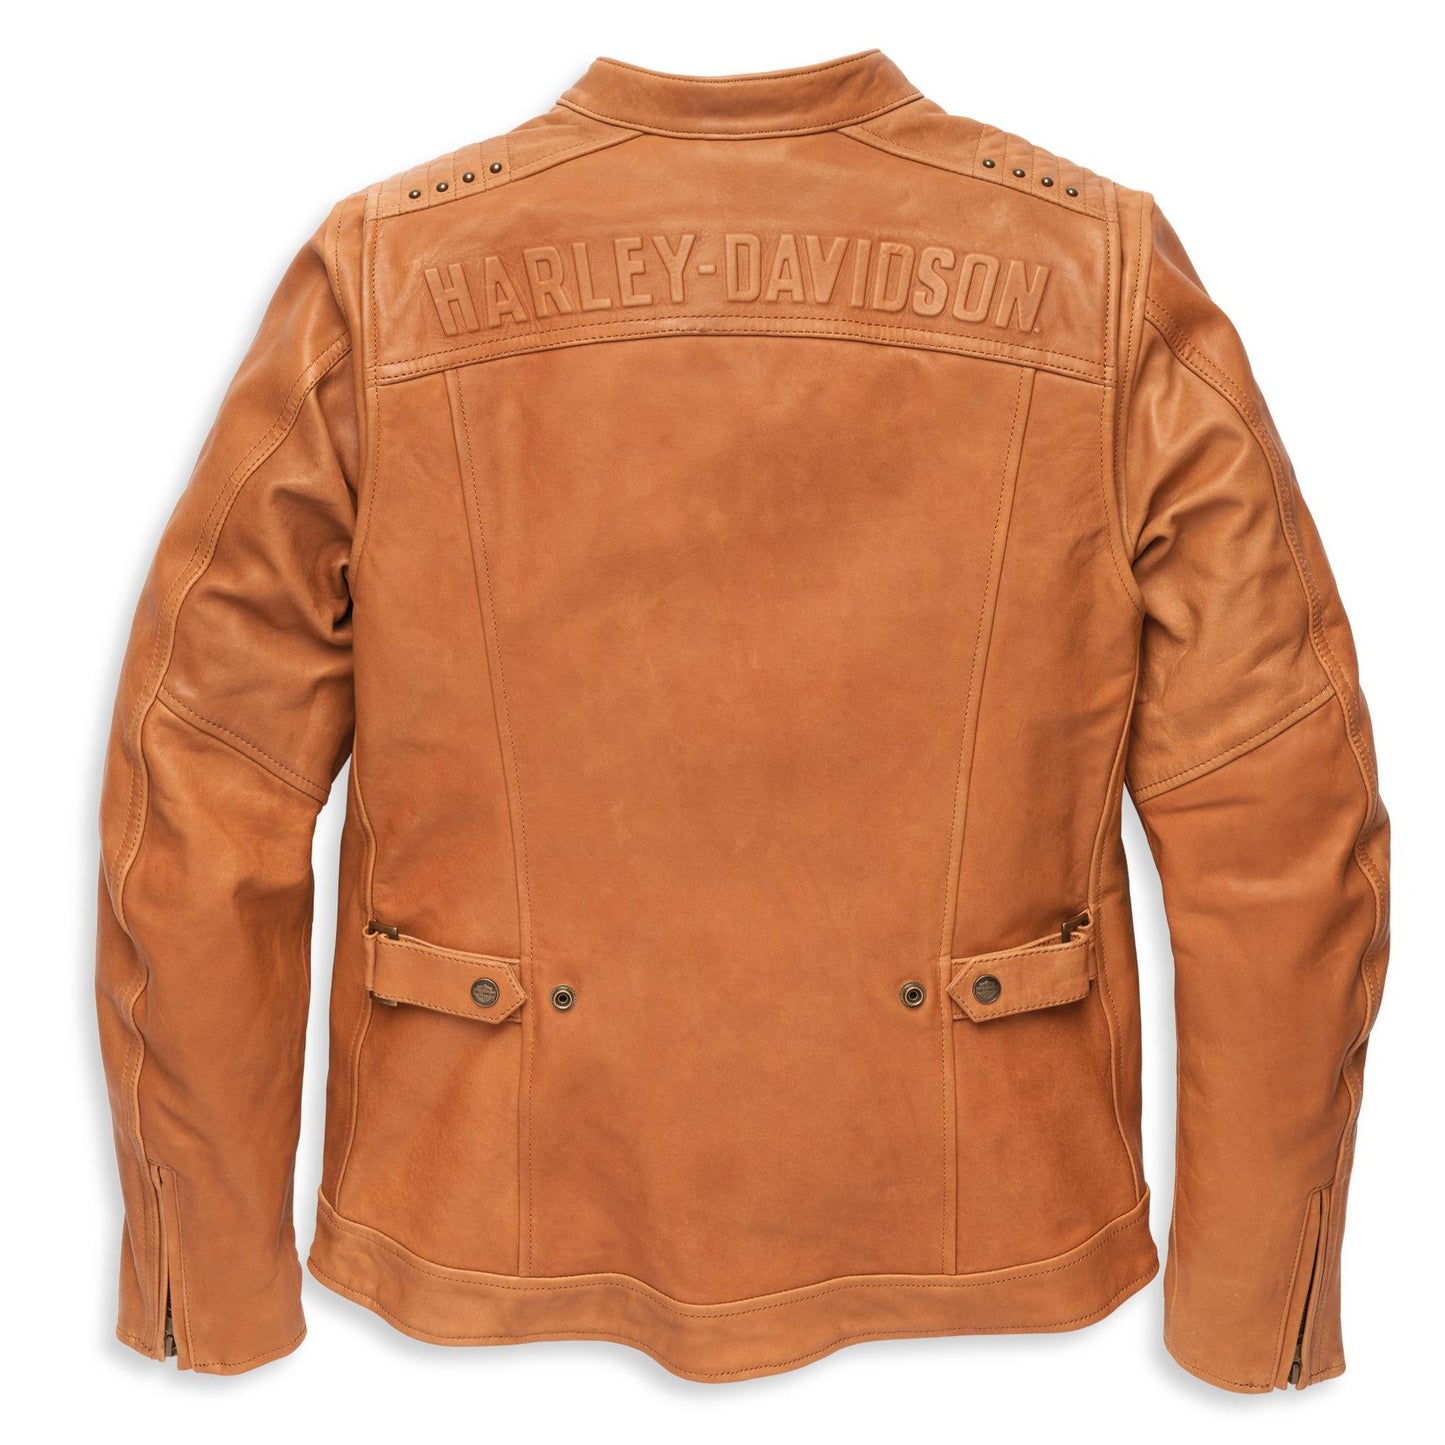 97001-22VW. Harley-Davidson Women's Electra Mandarin Collar Studded Leather Jacket. BACK.